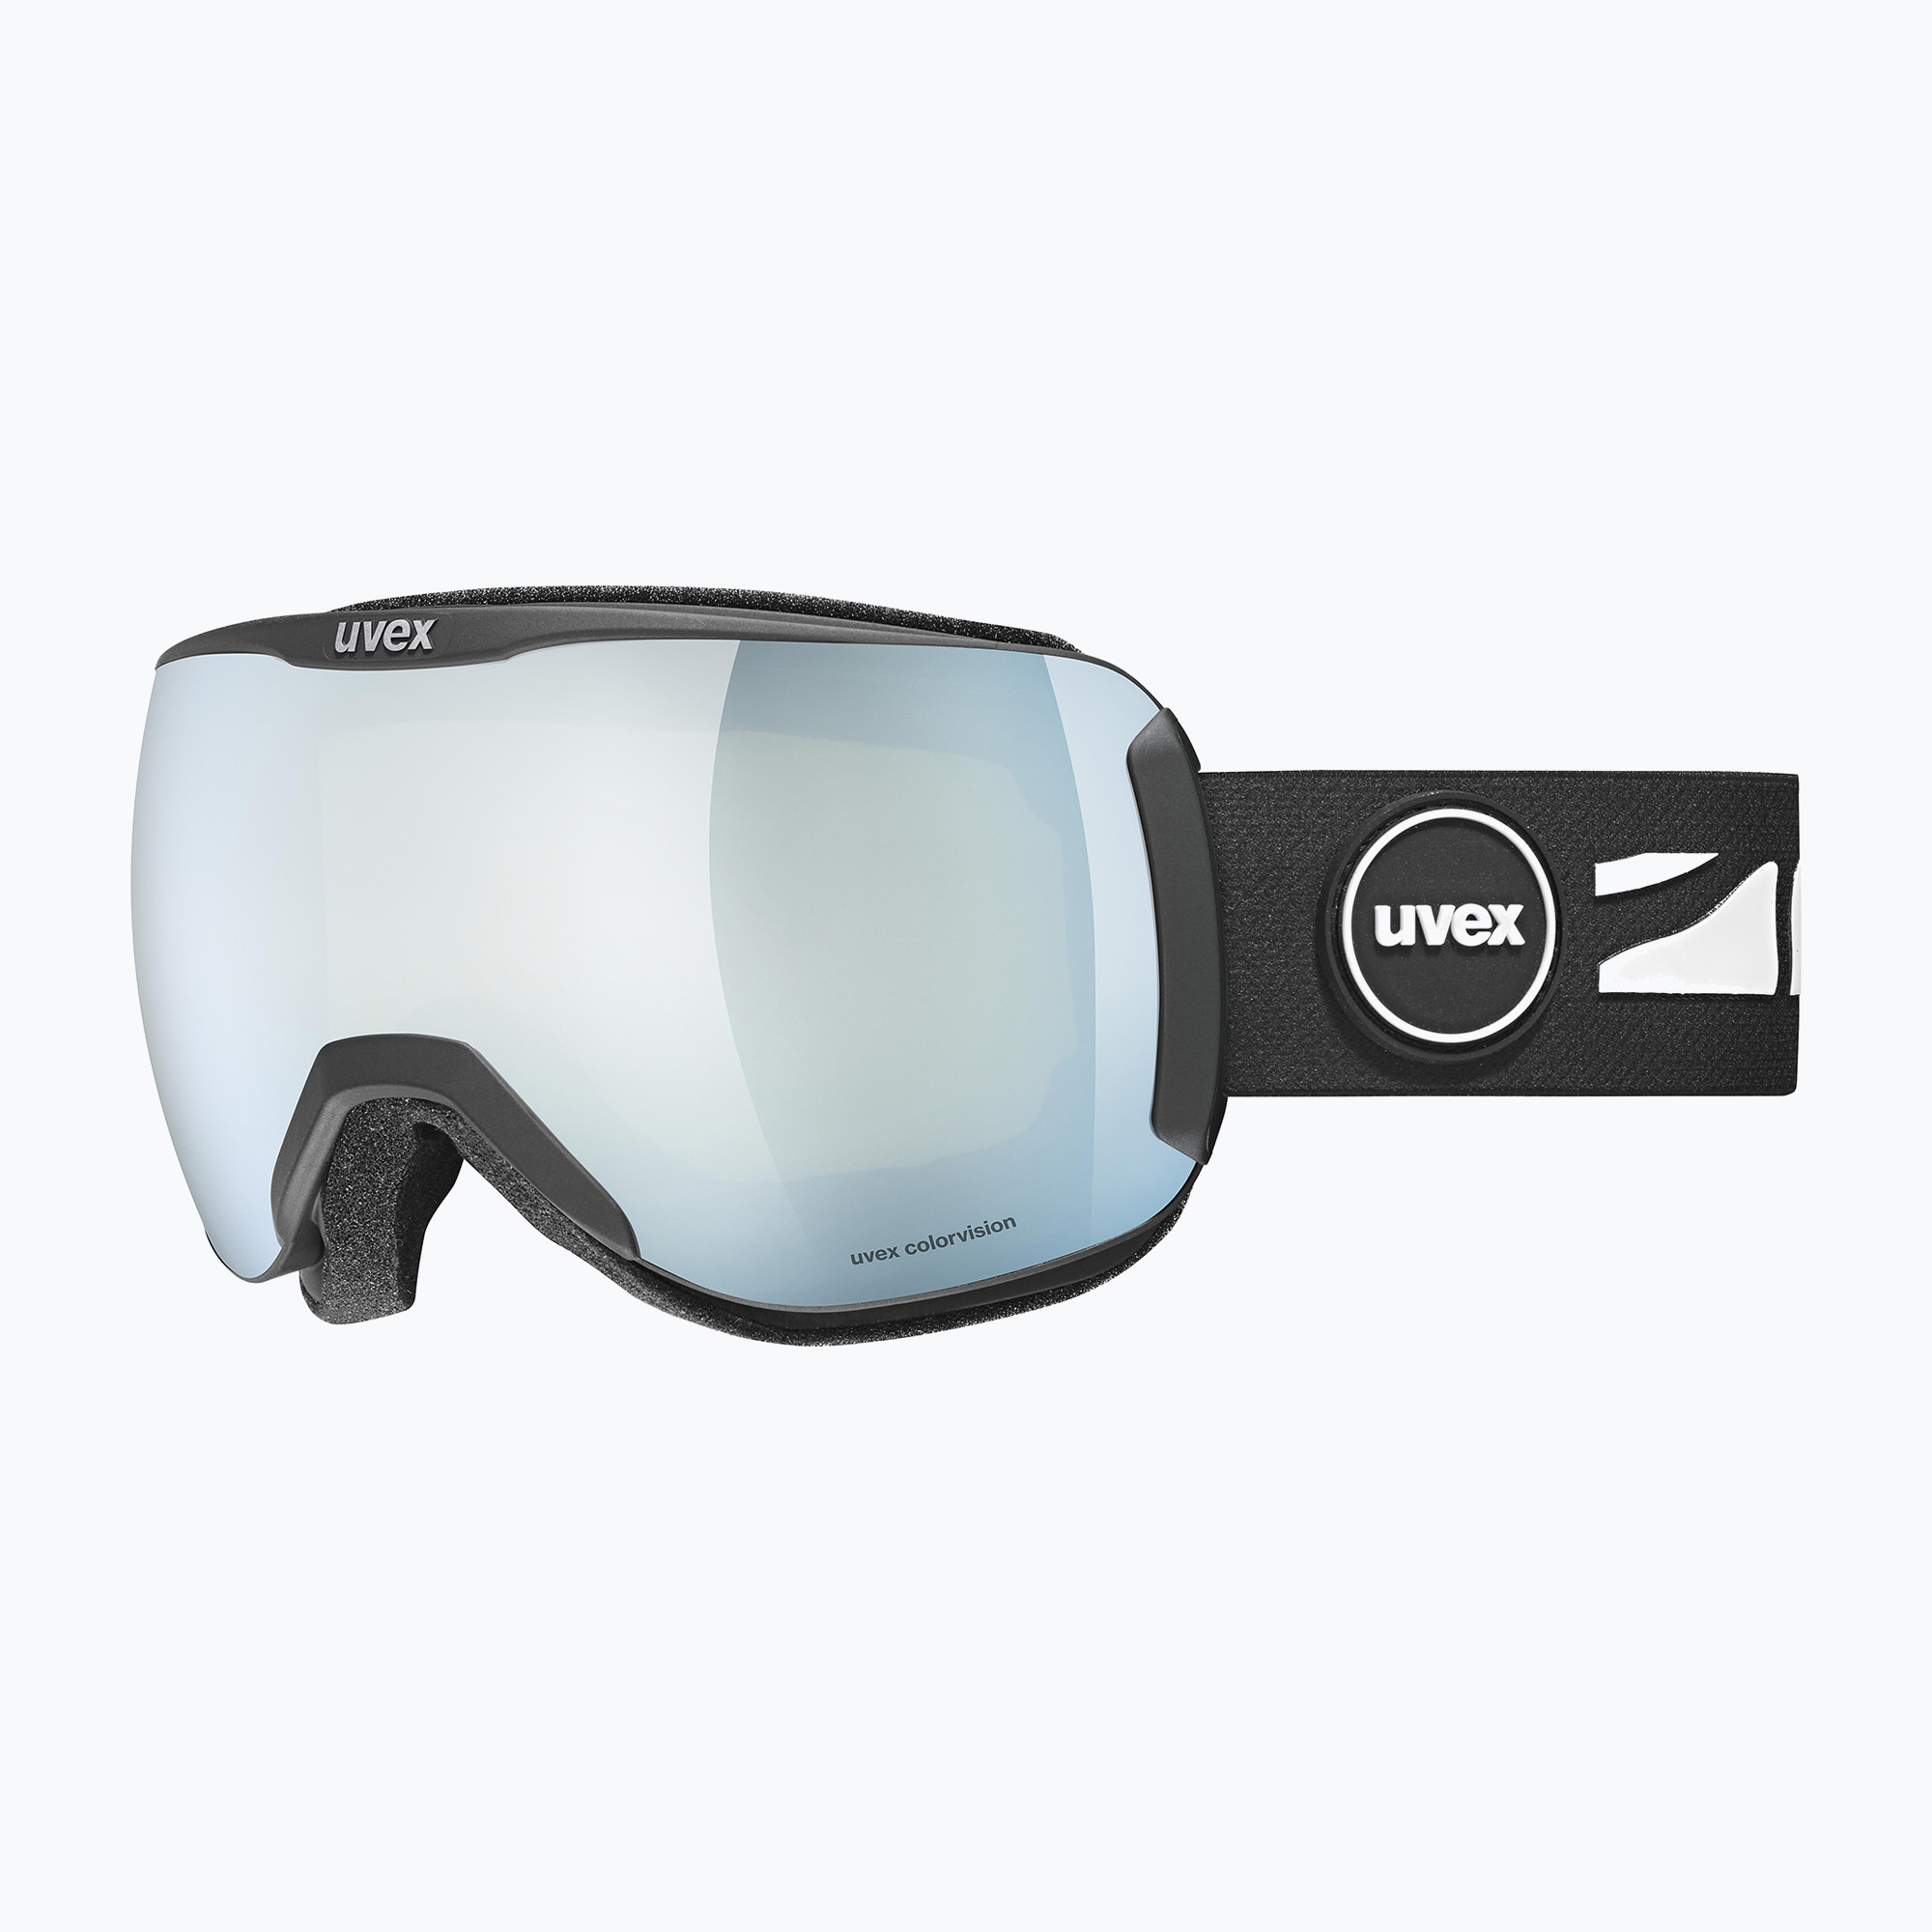 UVEX Downhill 2100 CV ochelari de schi negru mat/alb cu oglindă/verde colorvision